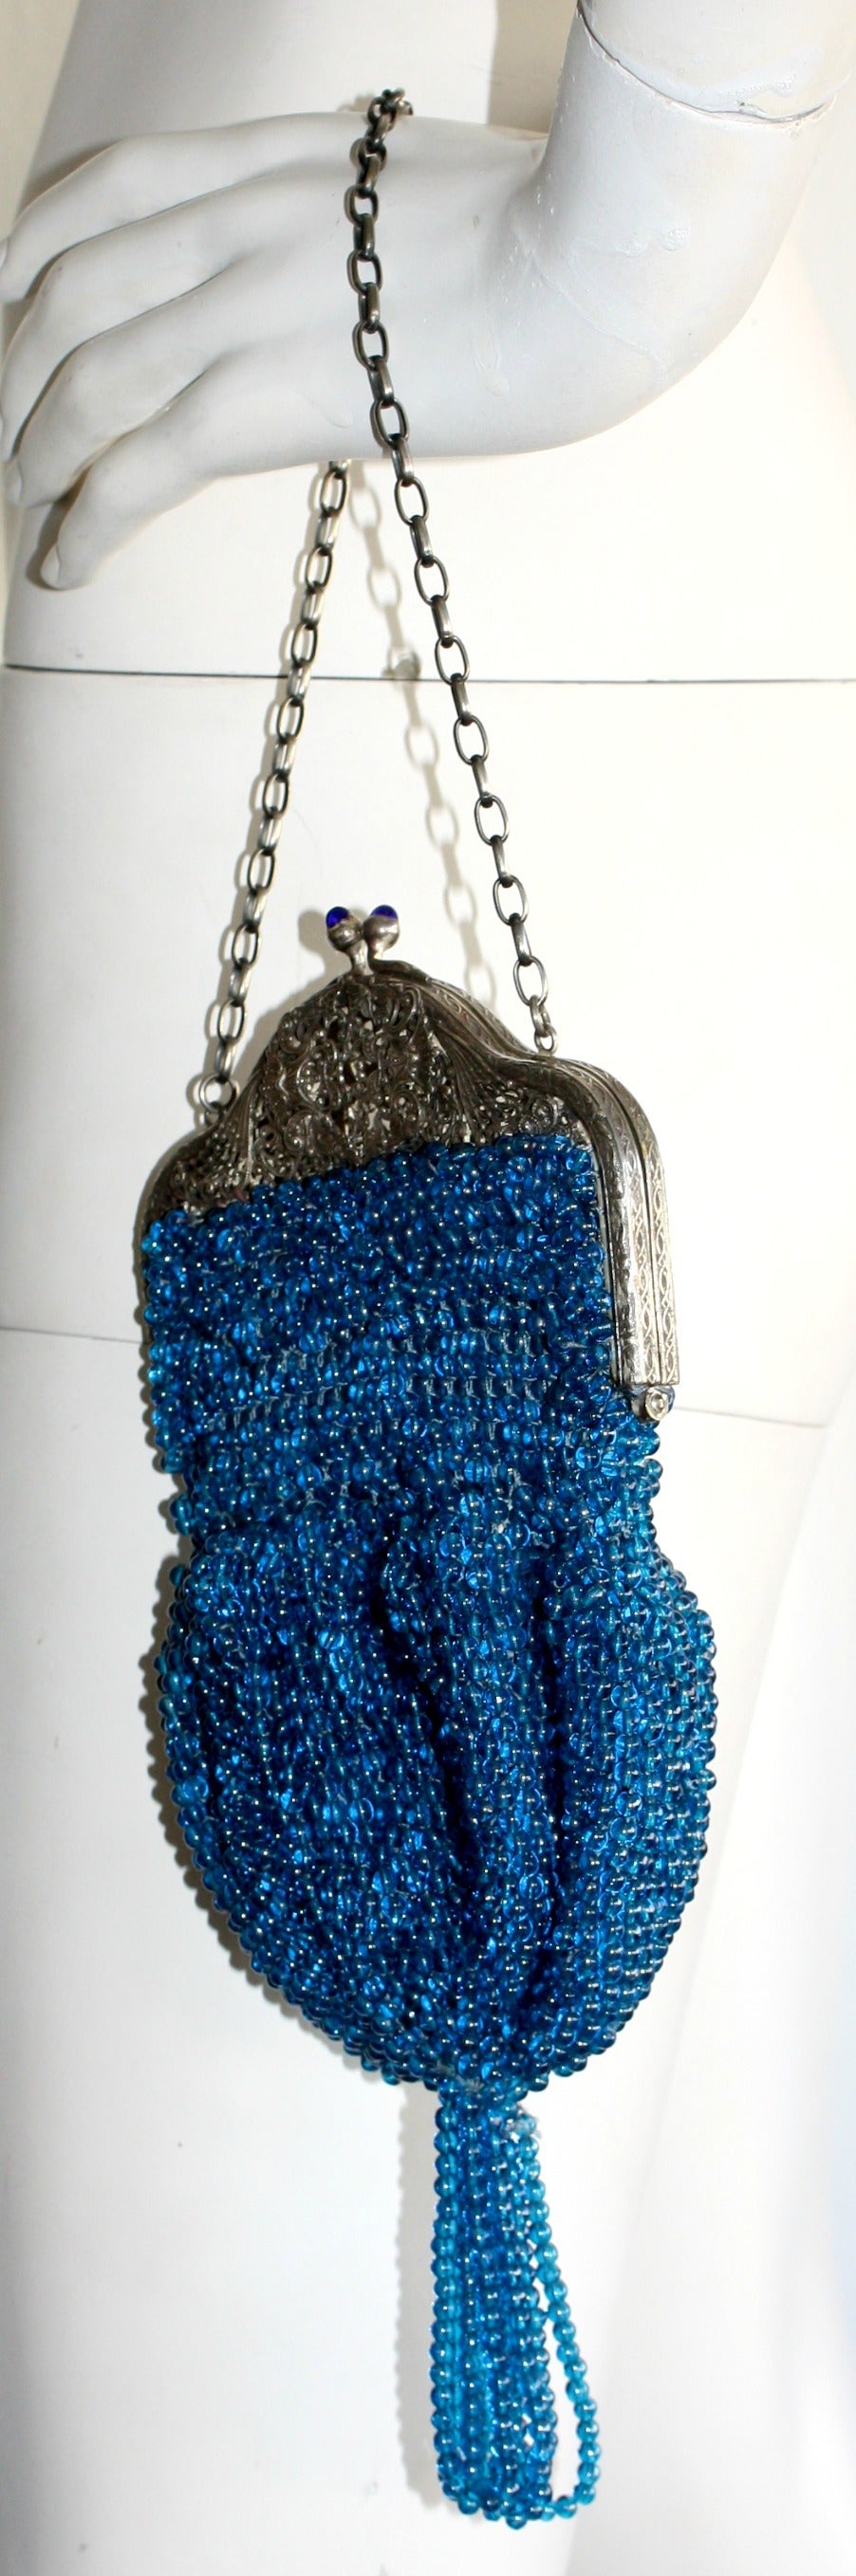 Striking Vintage 1920s Art Deco Purse Blue and Silver Beaded Tassel Flapper Bag at 1stdibs